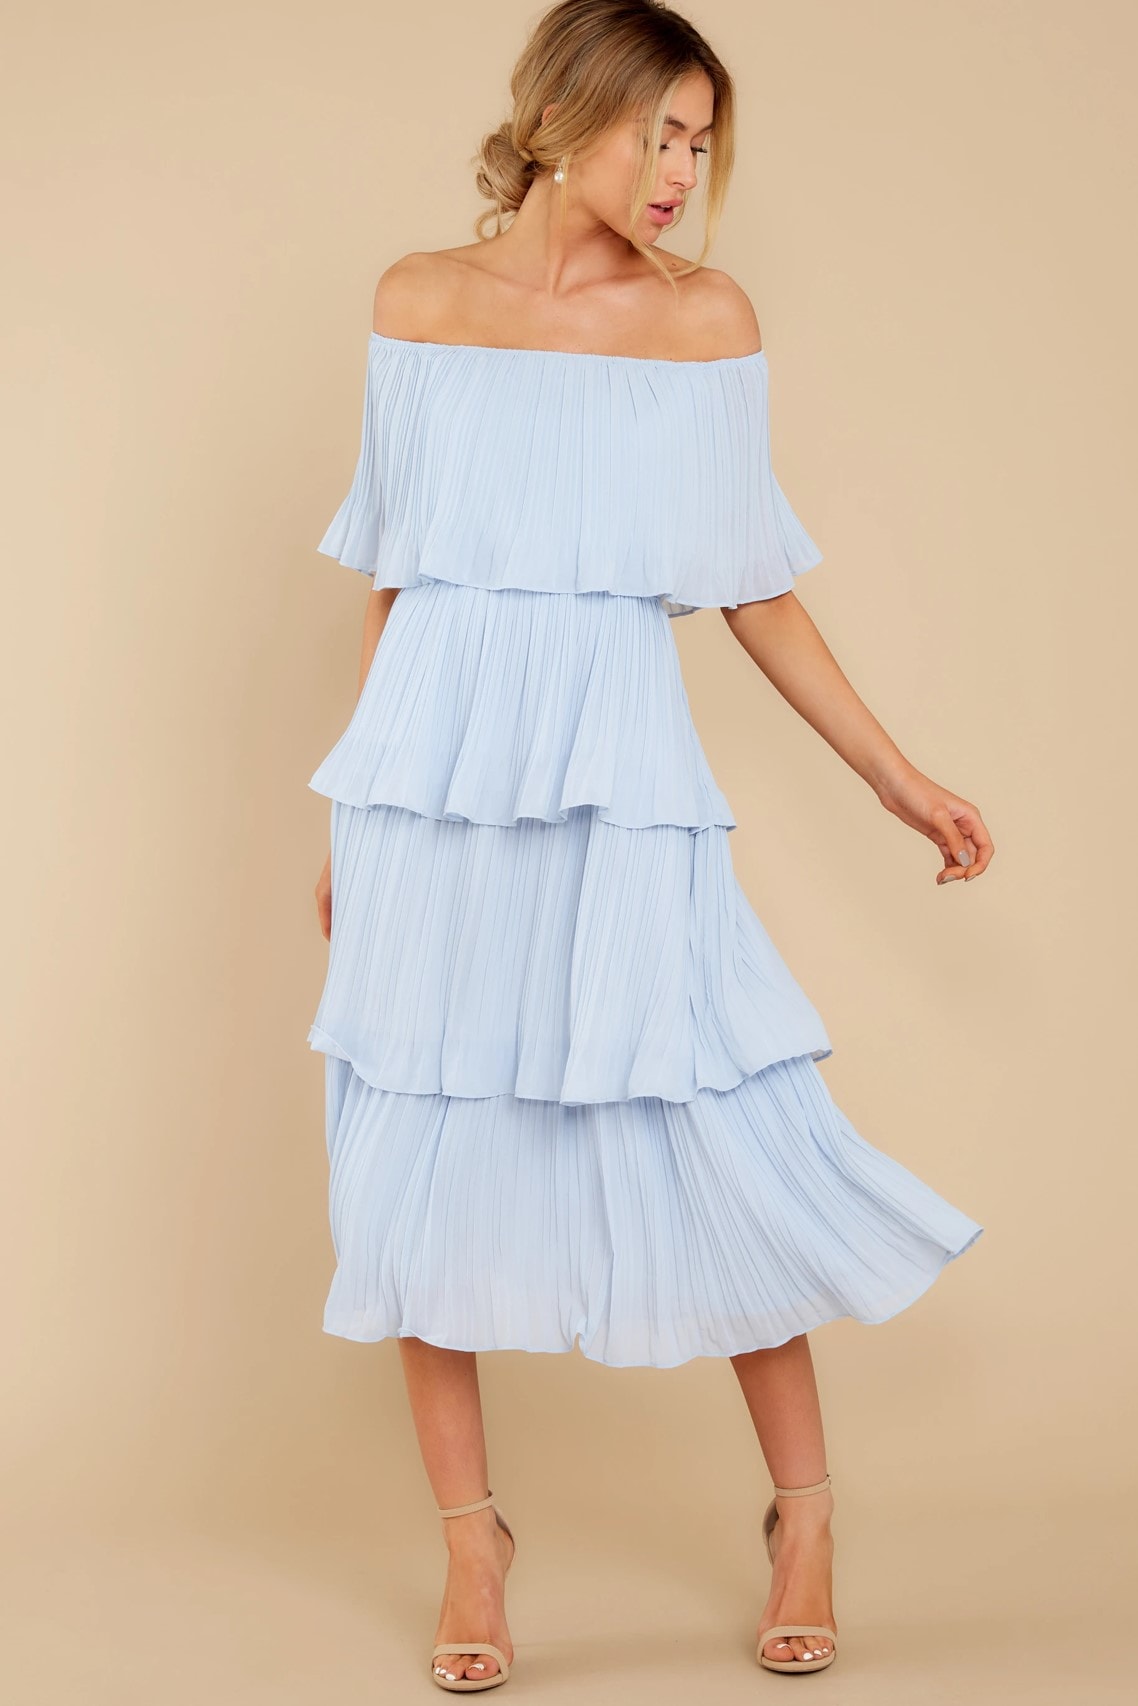 Pinterest Wedding Dresses Guest - Lace Midi Dresses | Dress for the ...